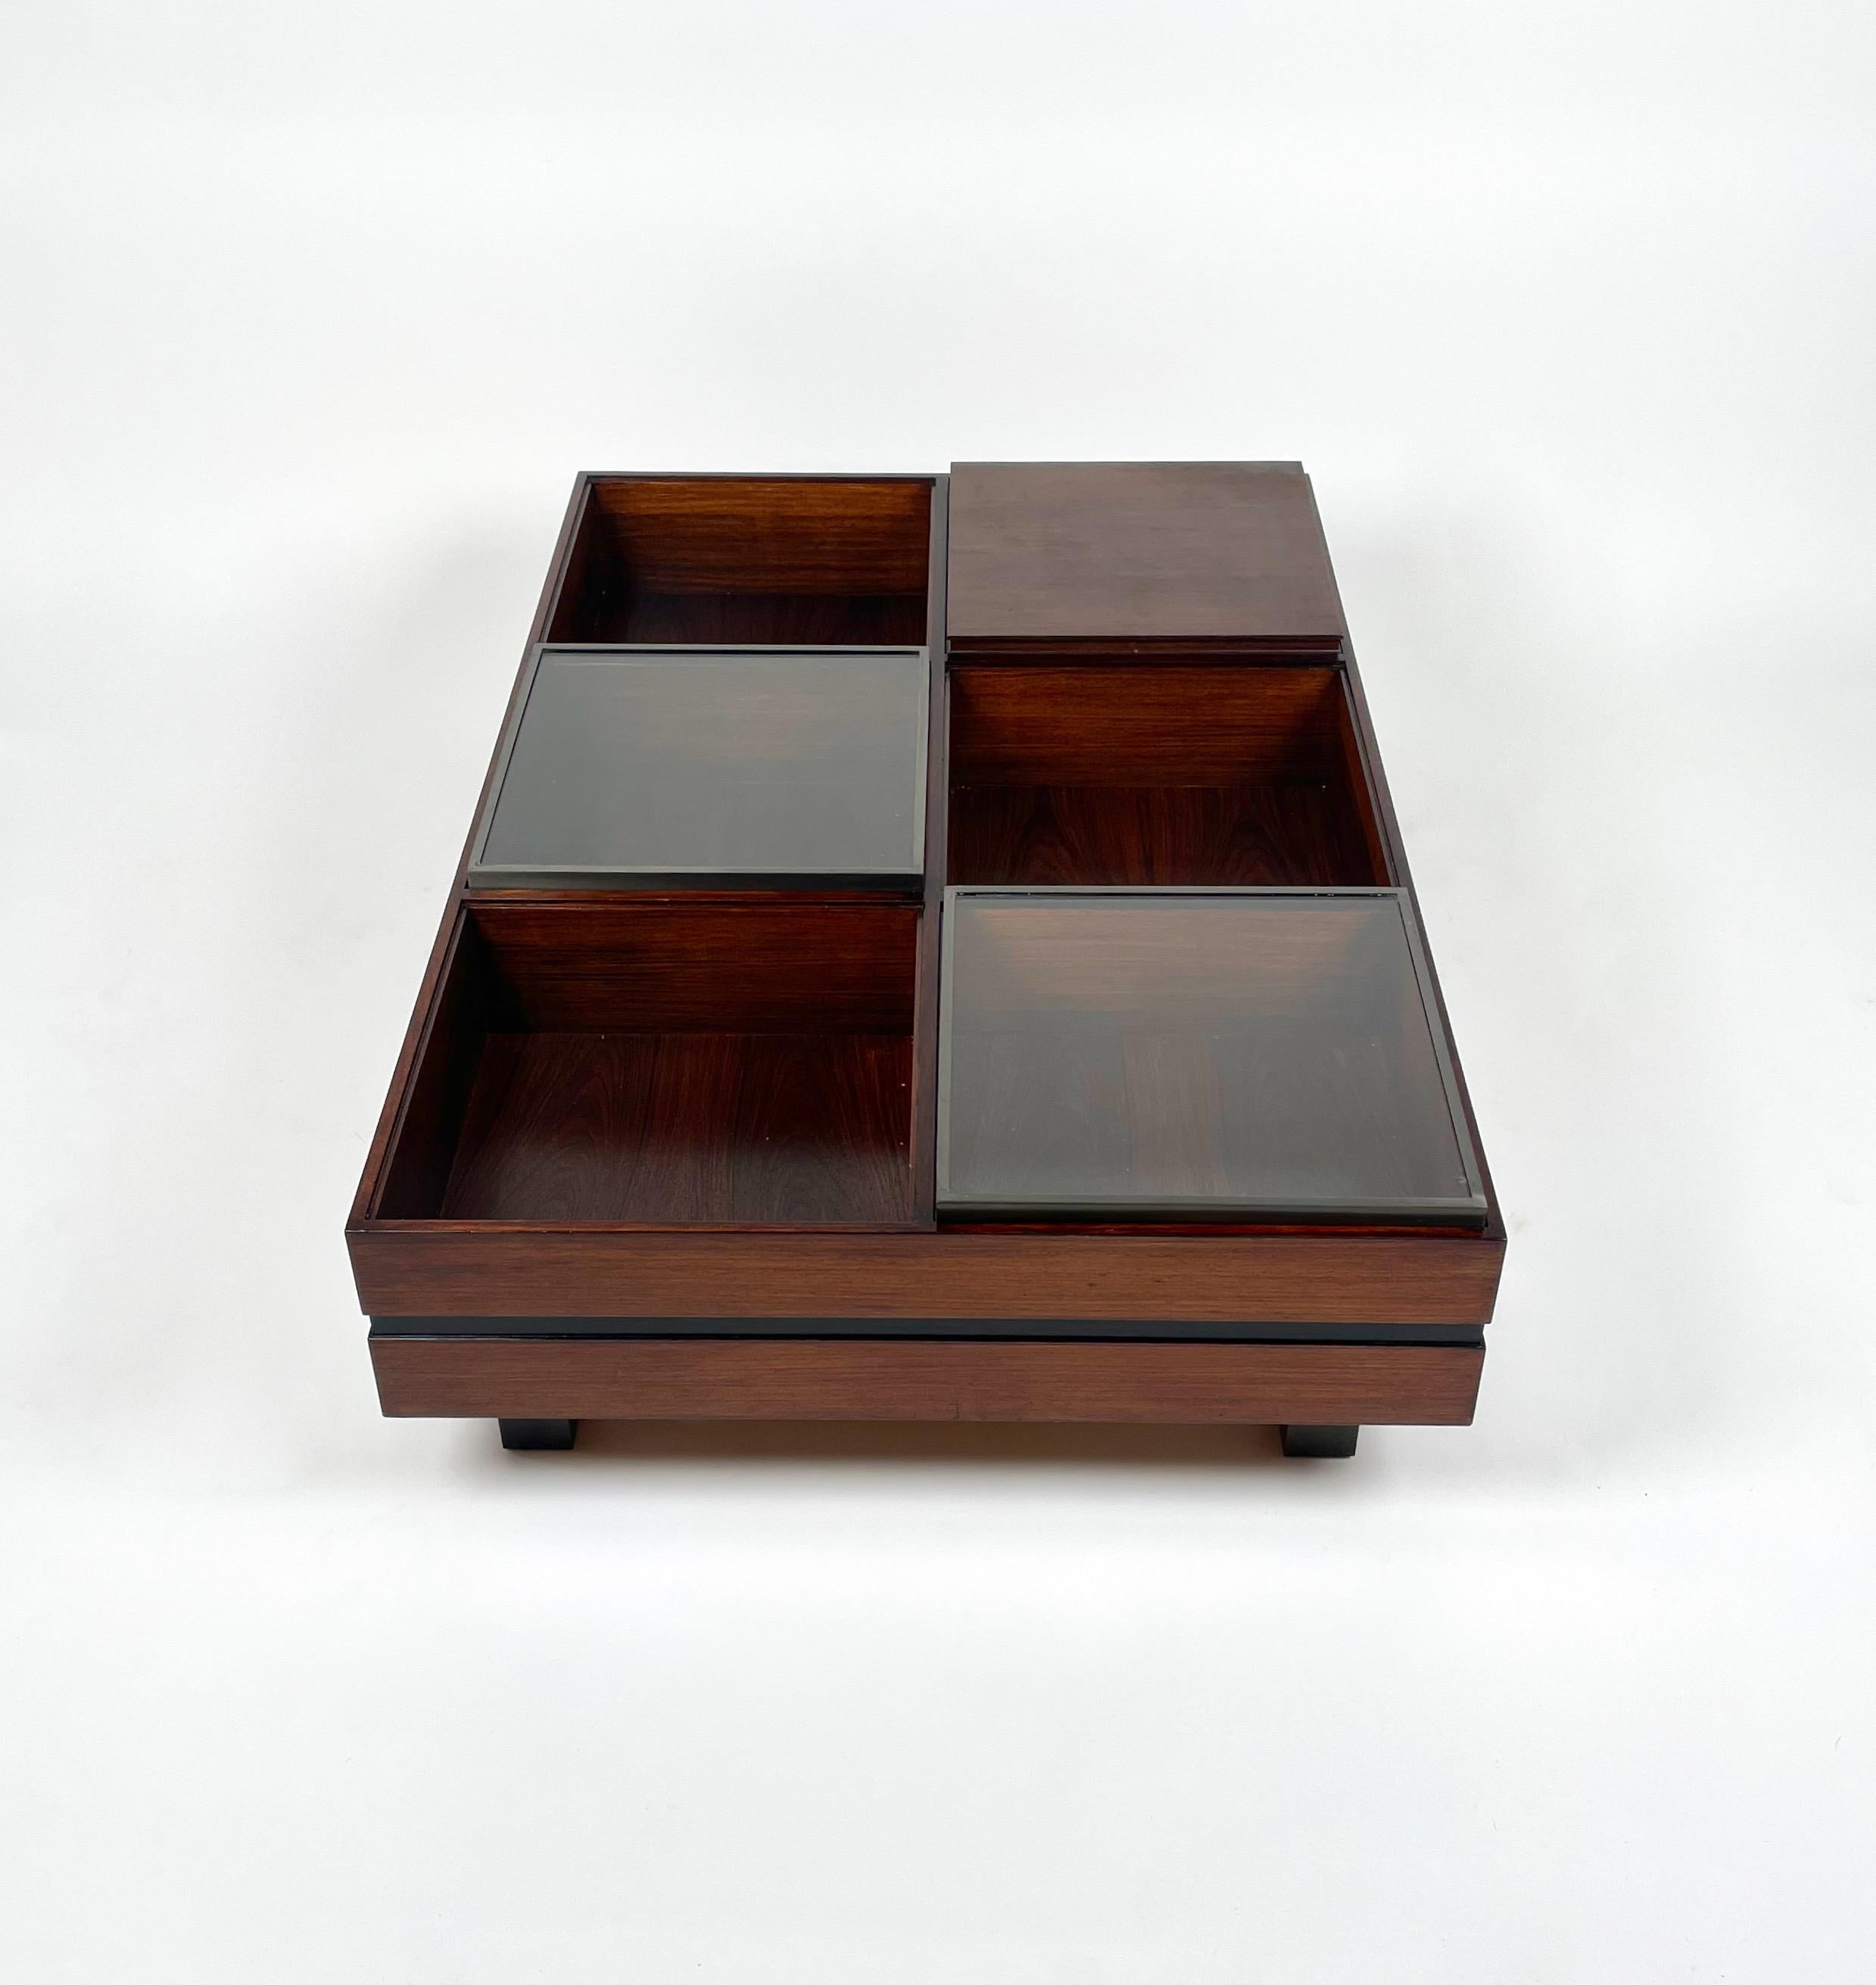 Luigi Sormani Rectangular Modular Coffee Table in Wood and Glass, Italy, 1960s For Sale 5